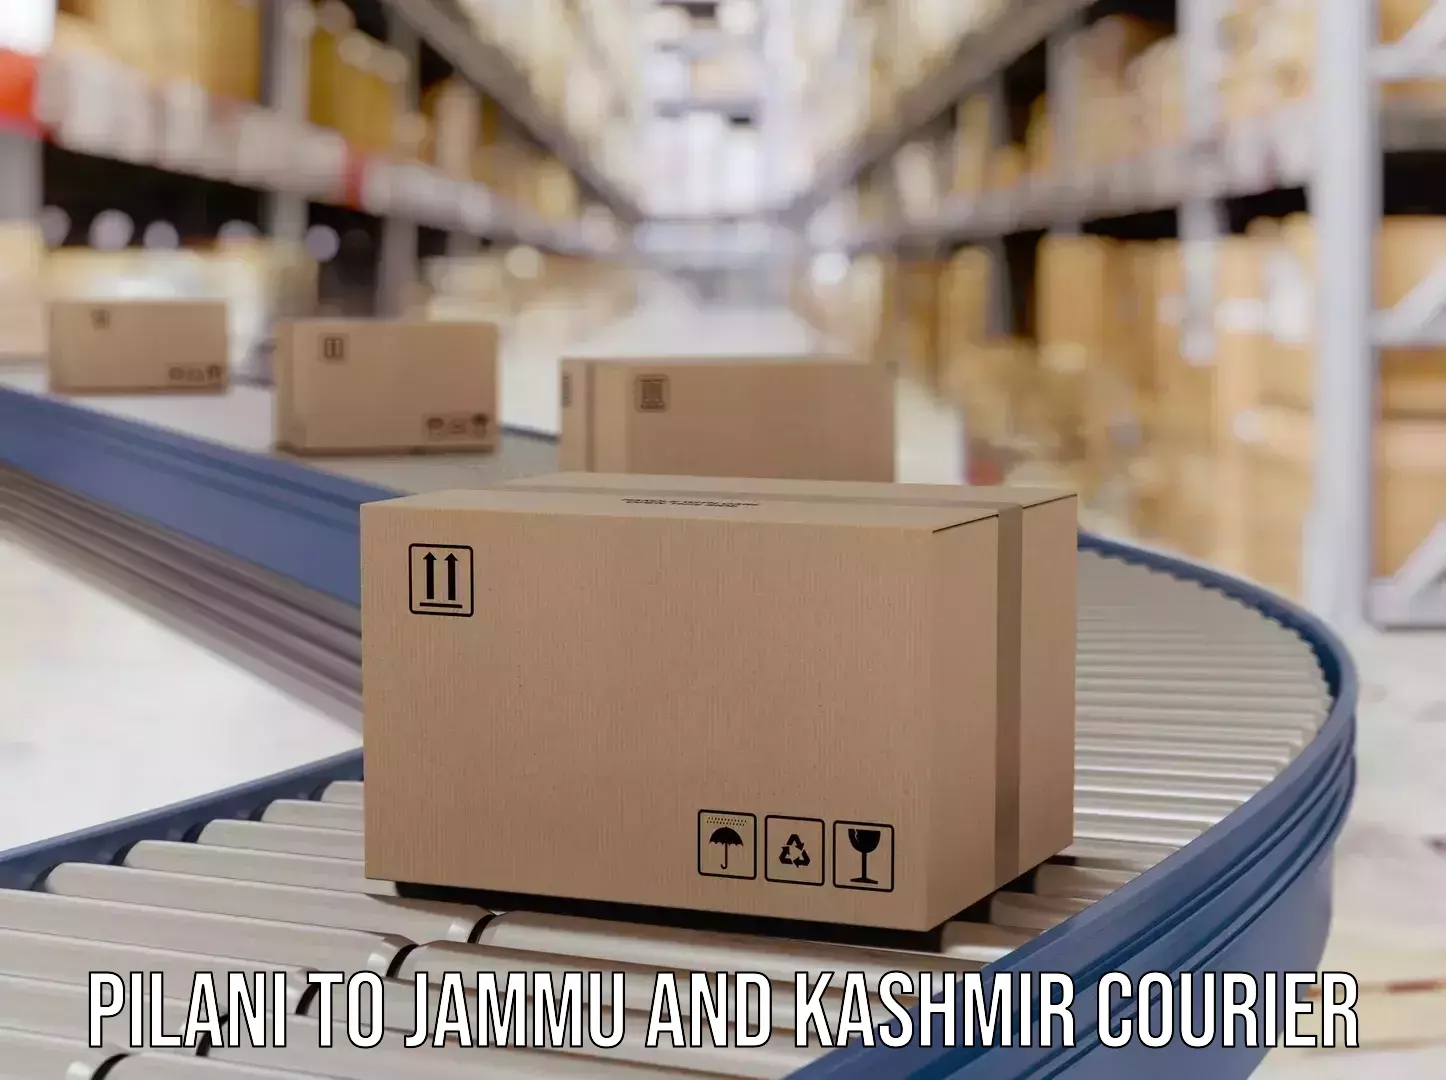 Global logistics network Pilani to Jammu and Kashmir